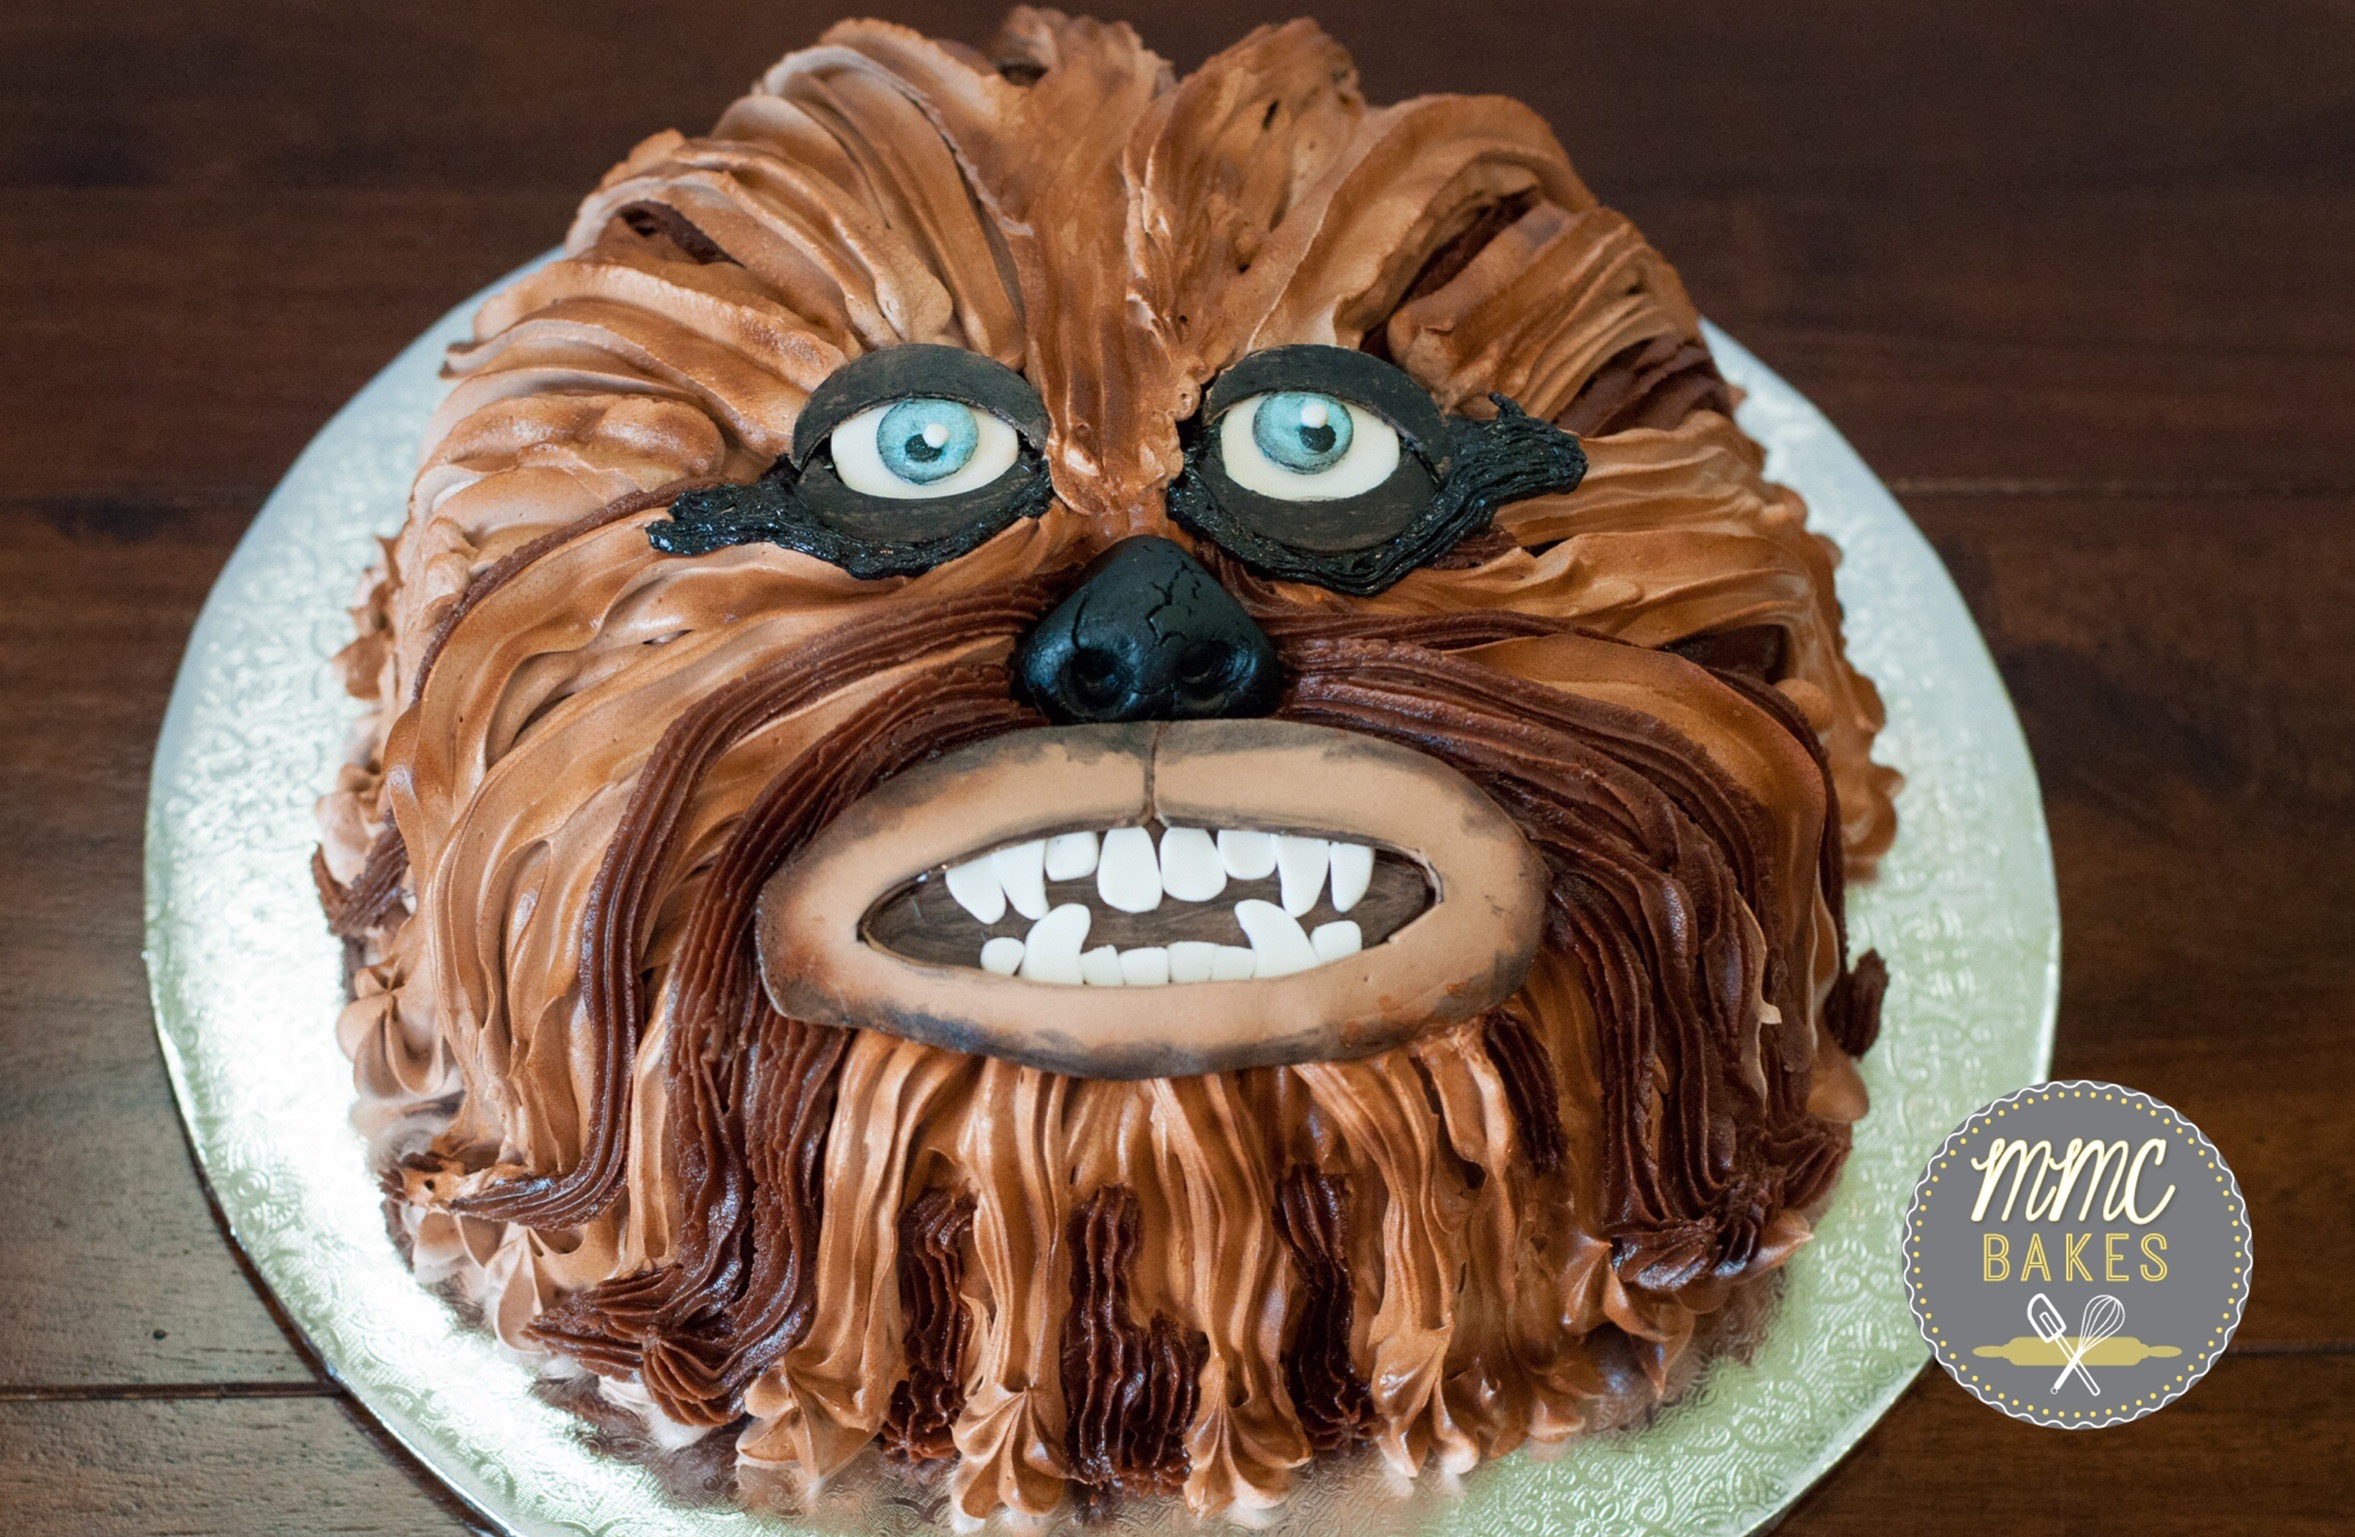 Star Wars Birthday Cakes – MMC Bakes